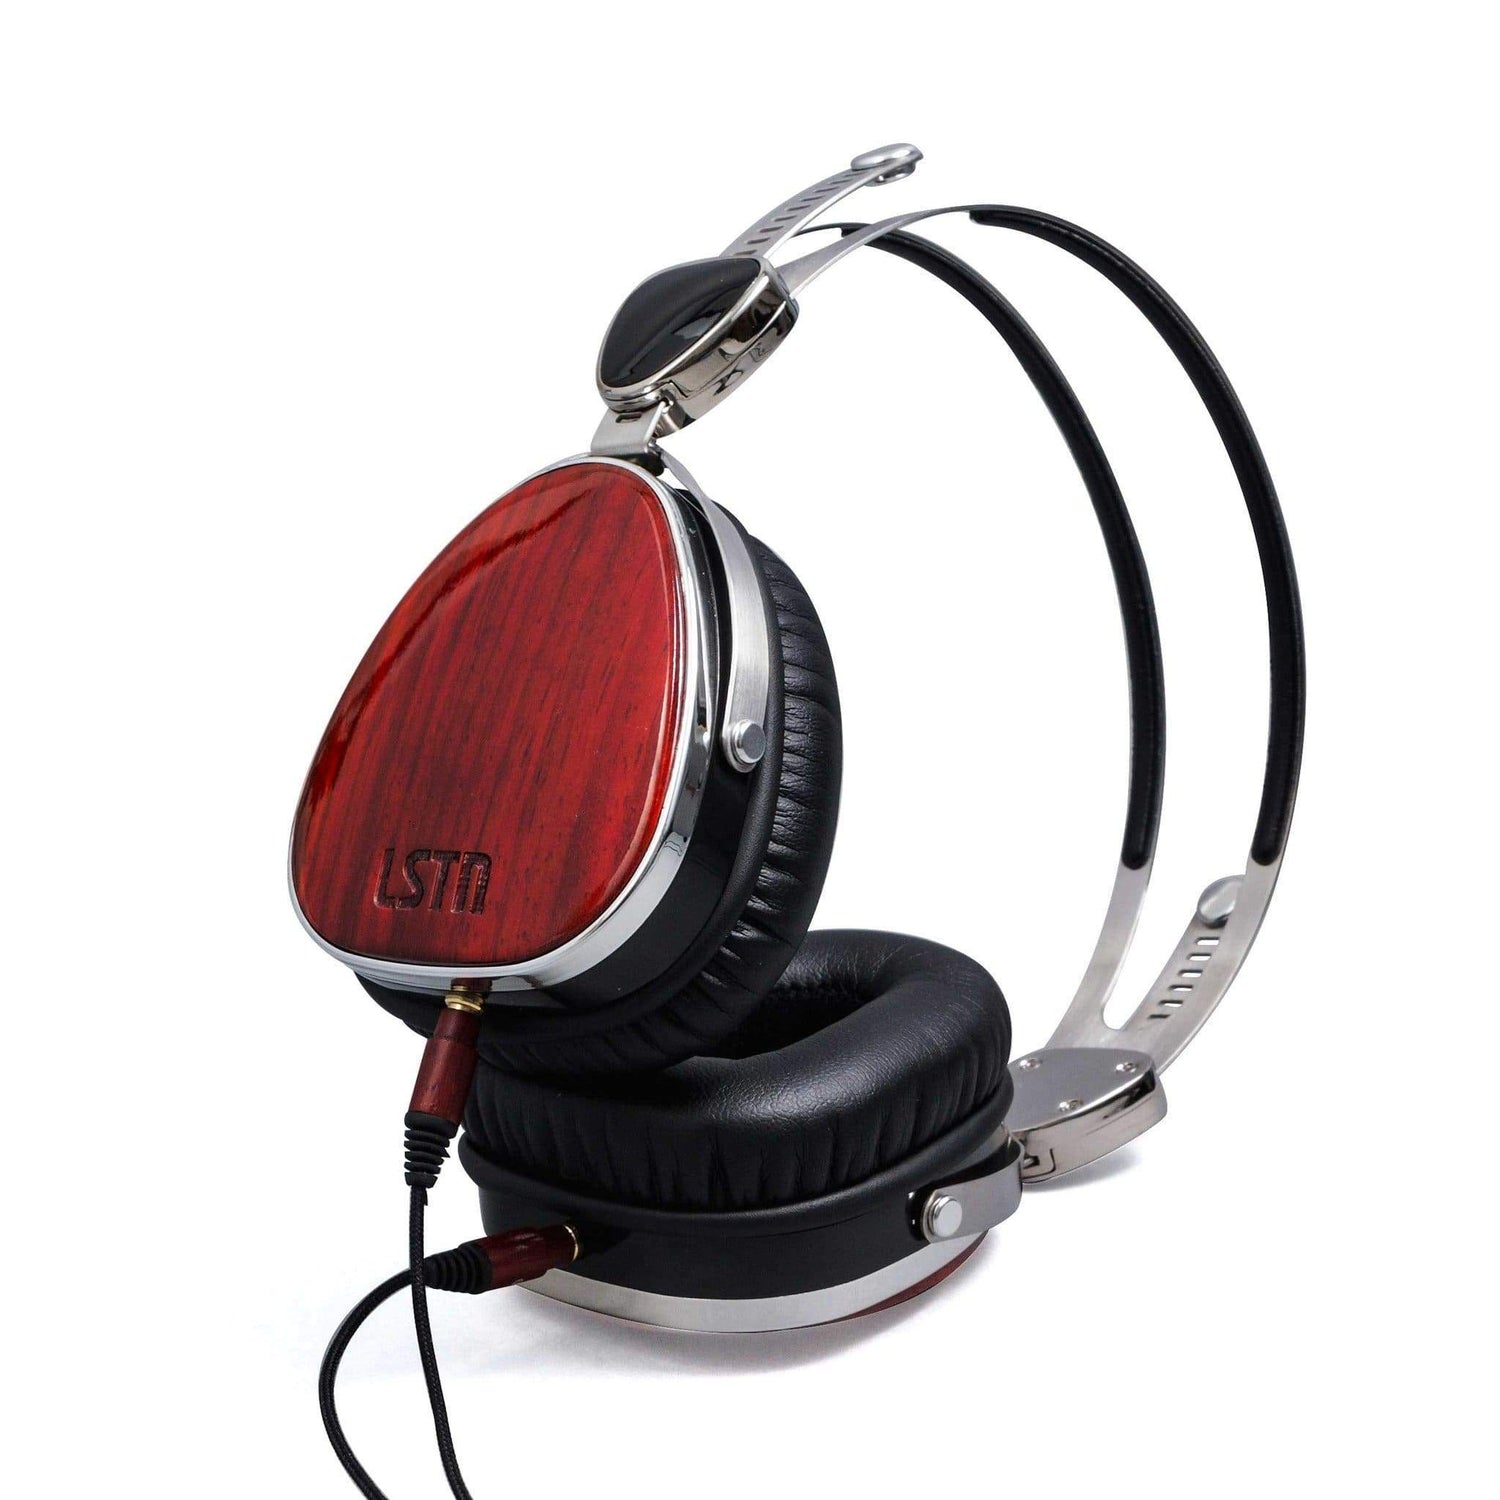 Headphone stand cherry wood